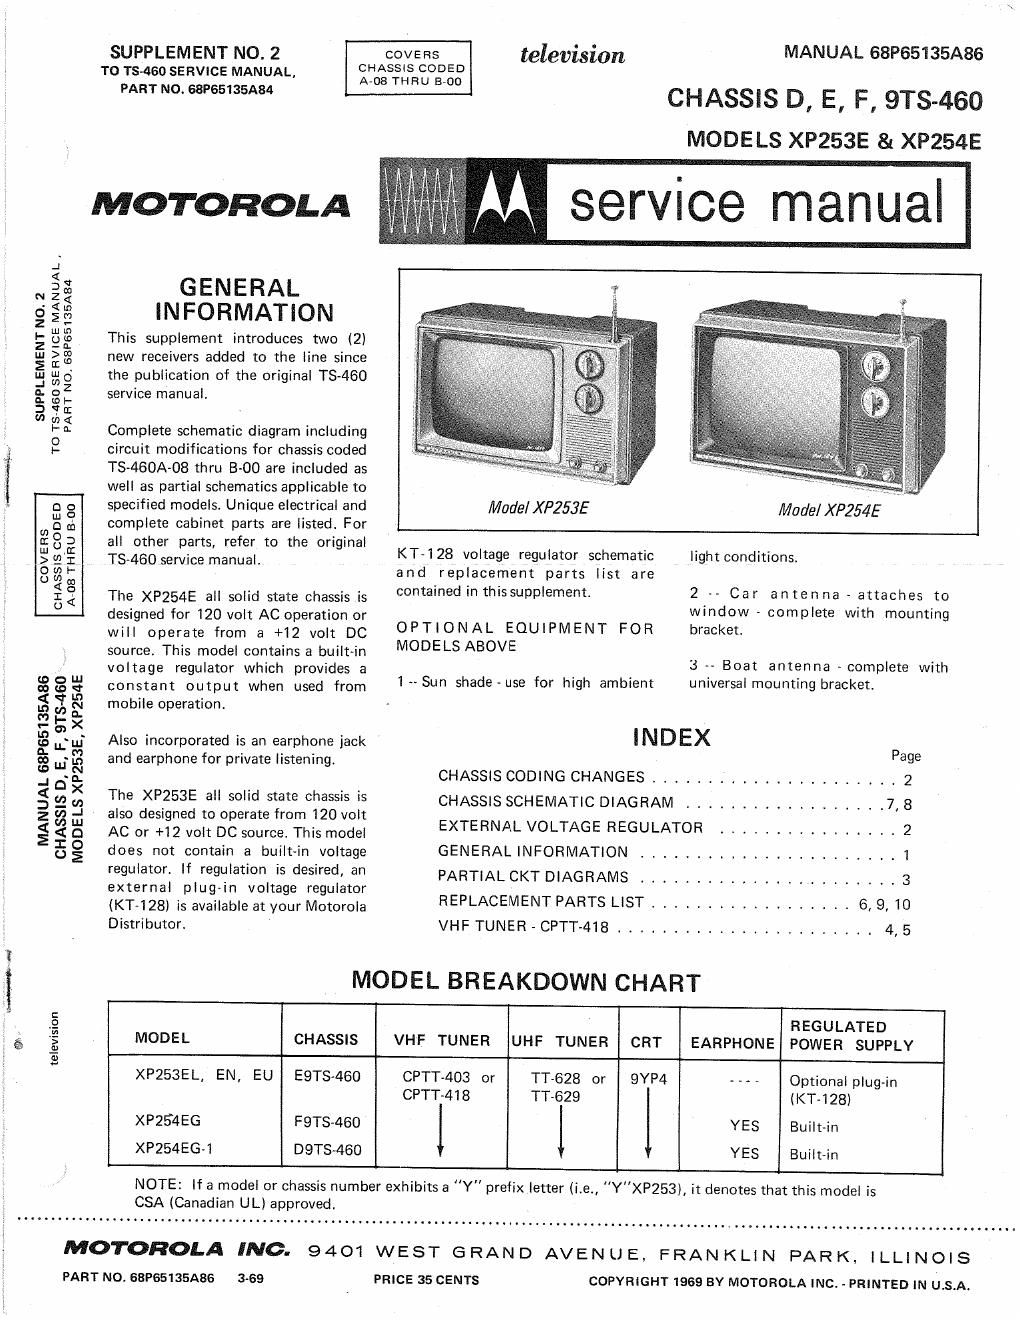 motorola xp 253 e service manual